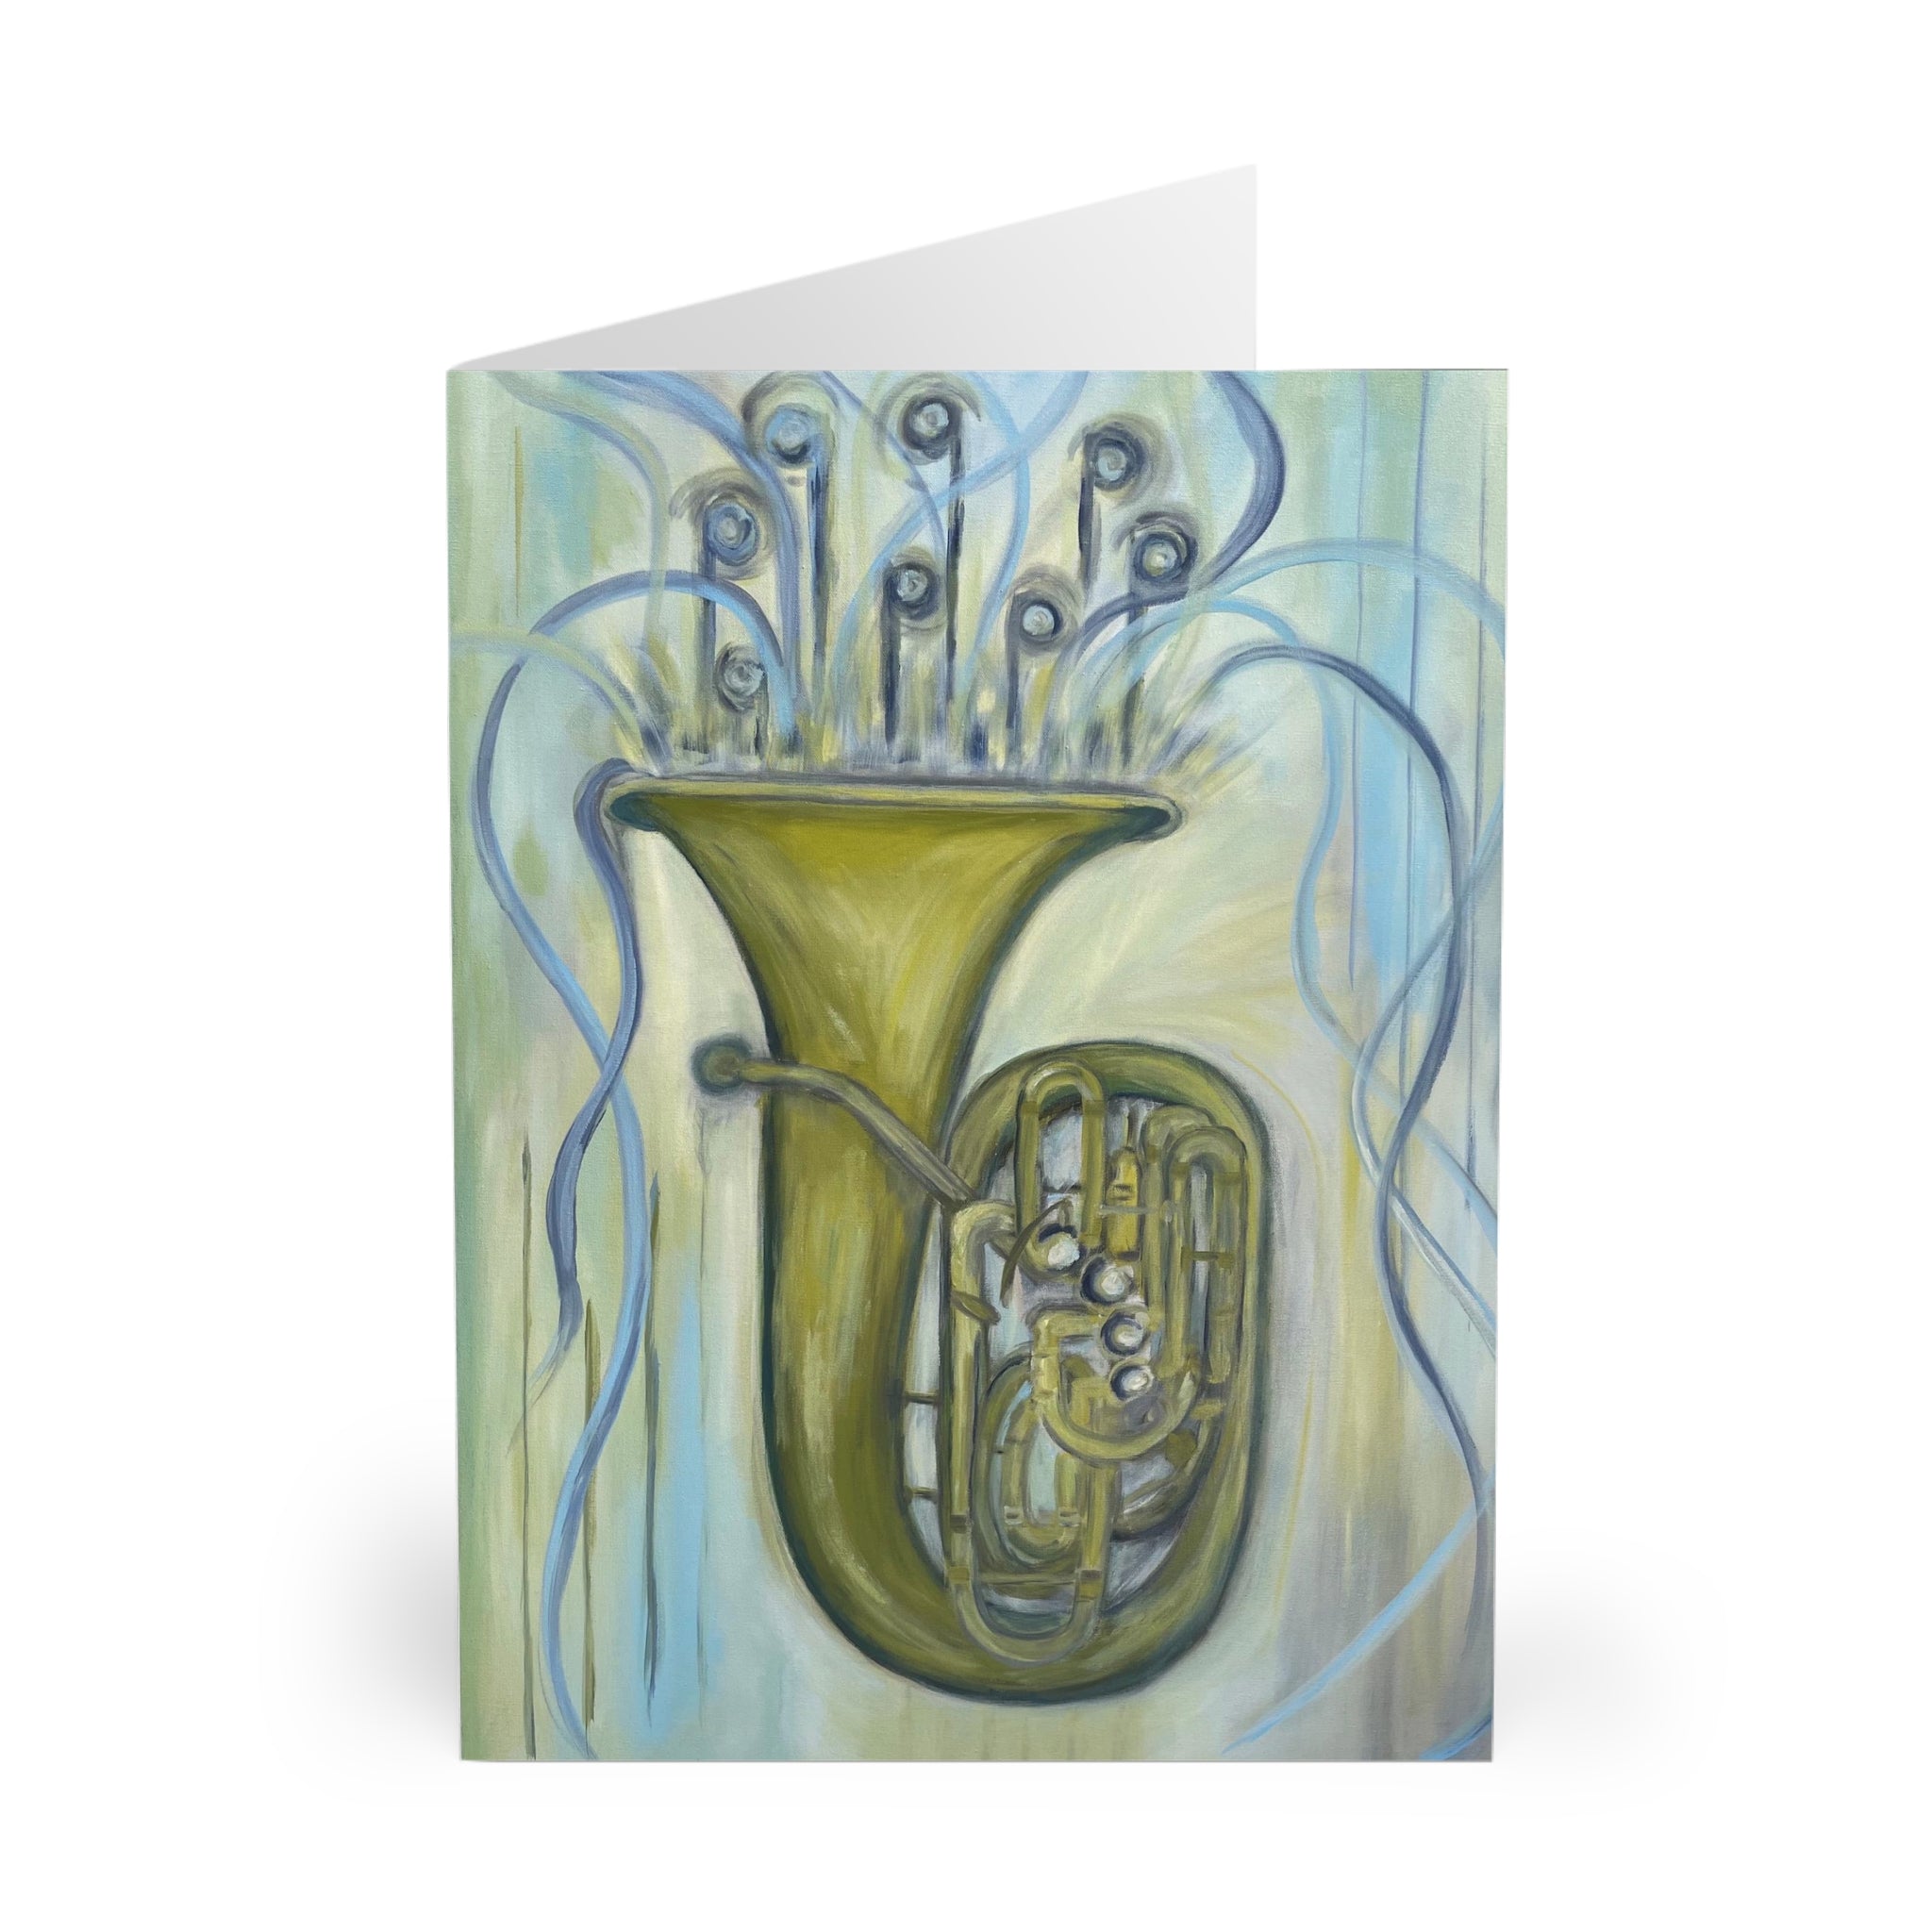 Note Cards (5 Pack) - "Tuba Tuba"